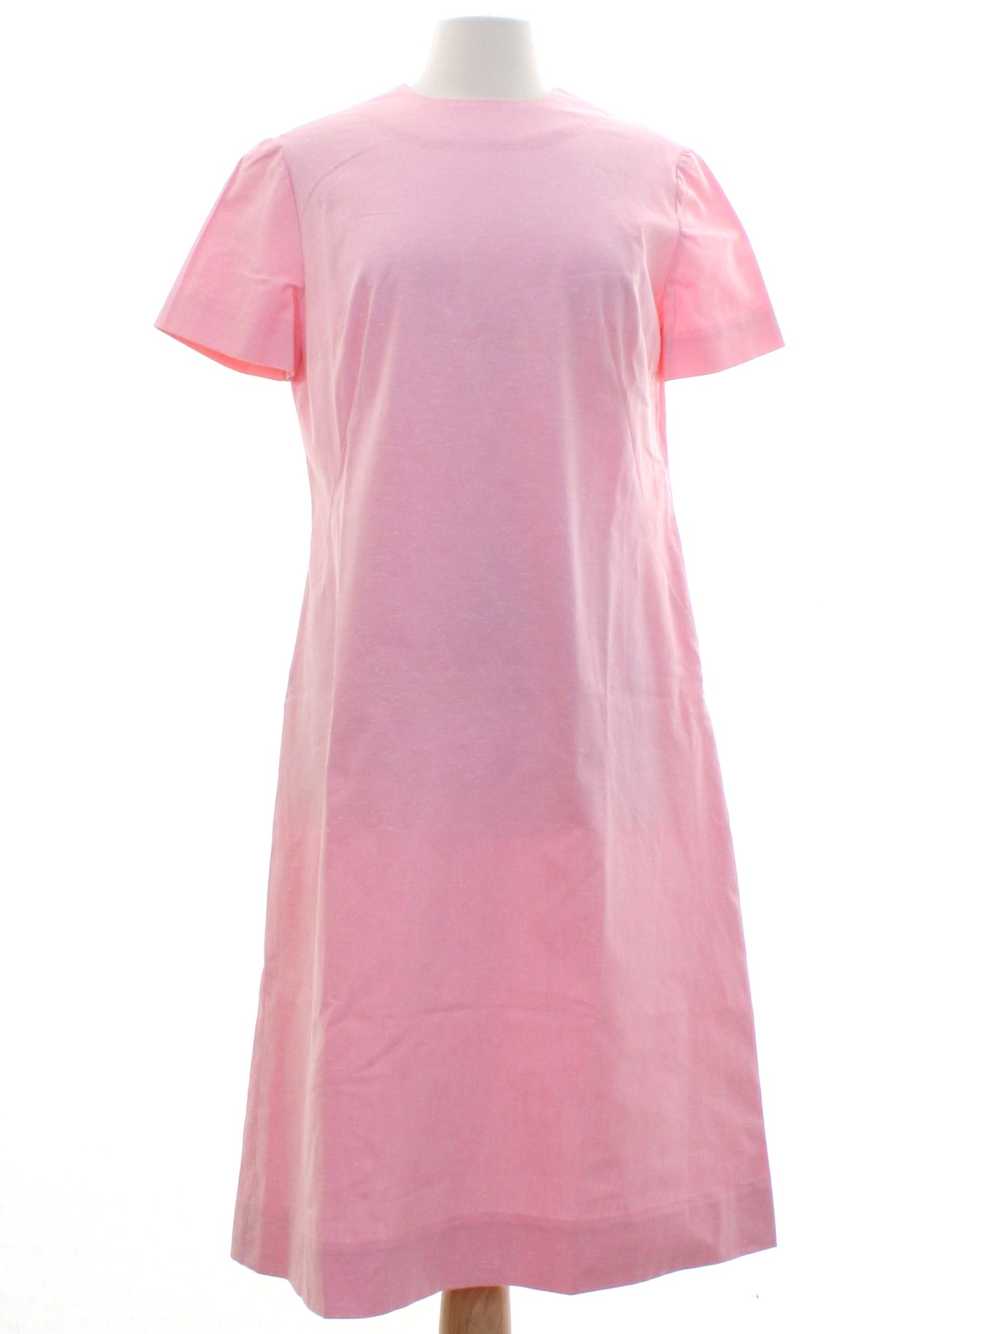 1970's Mod A-Line Dress - image 1